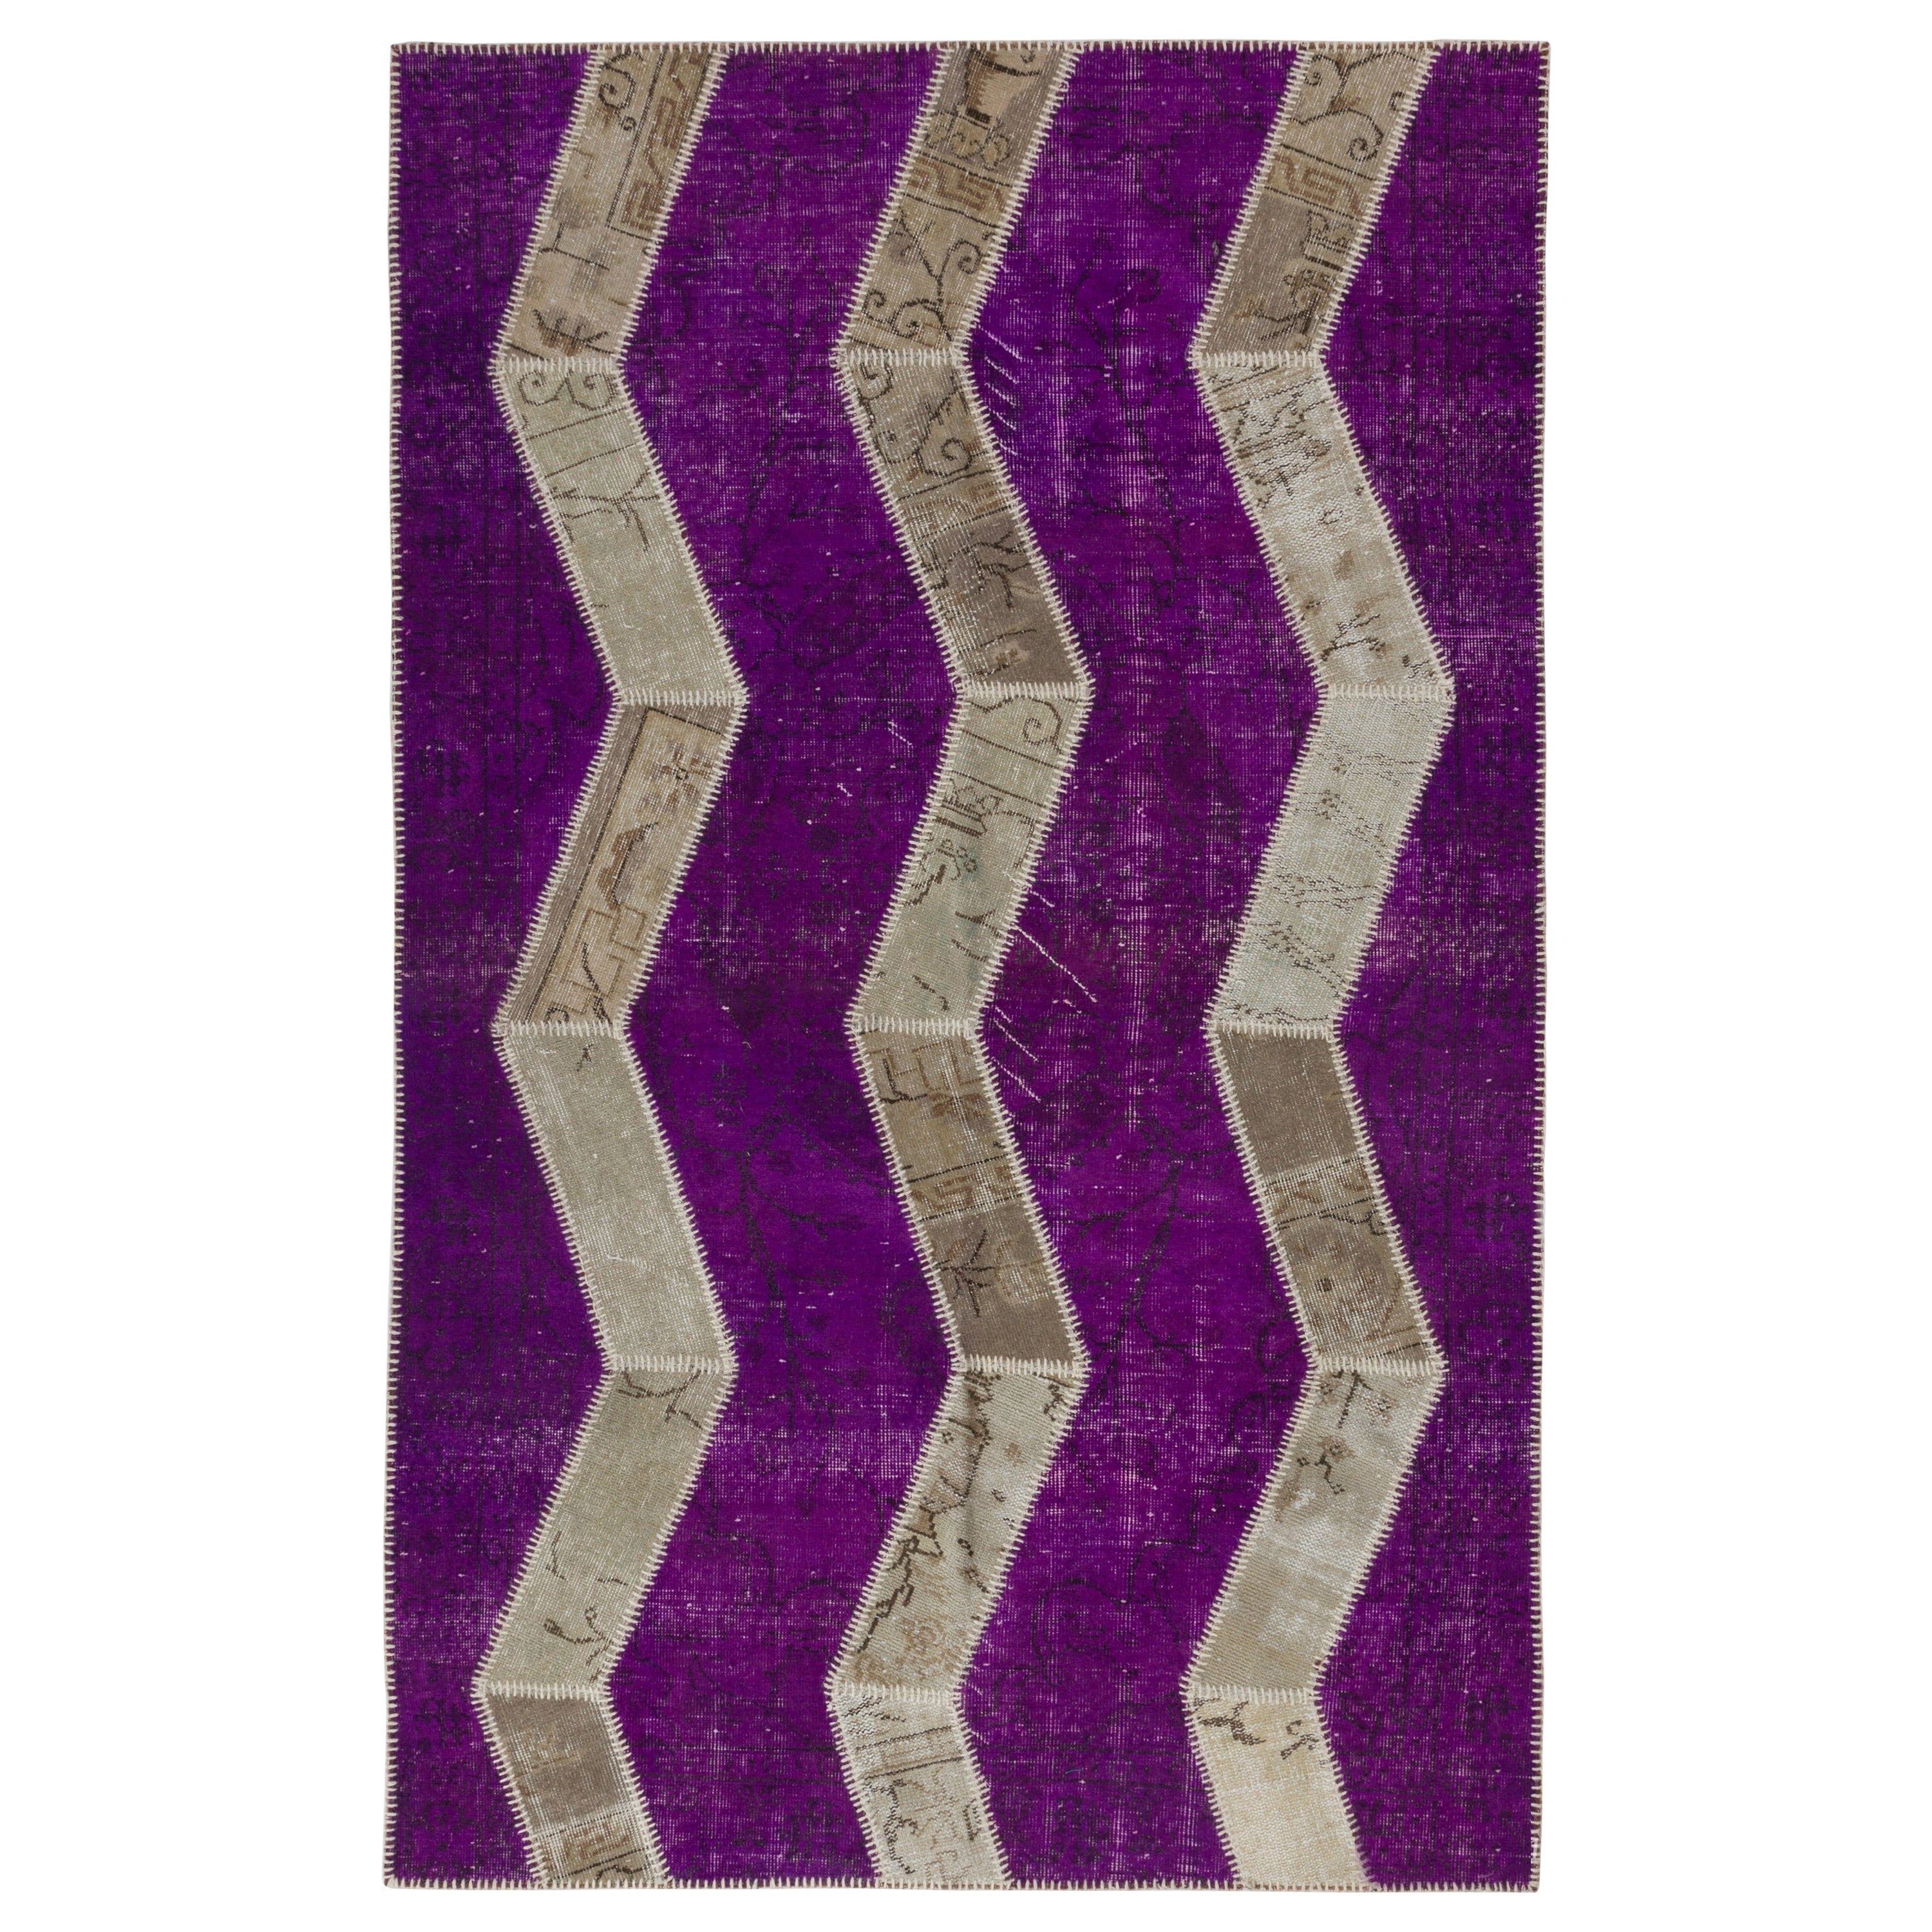 Zig Zag Design Patchwork Rug, Purple, Beige & Sand Colors. Custom Modern Carpet